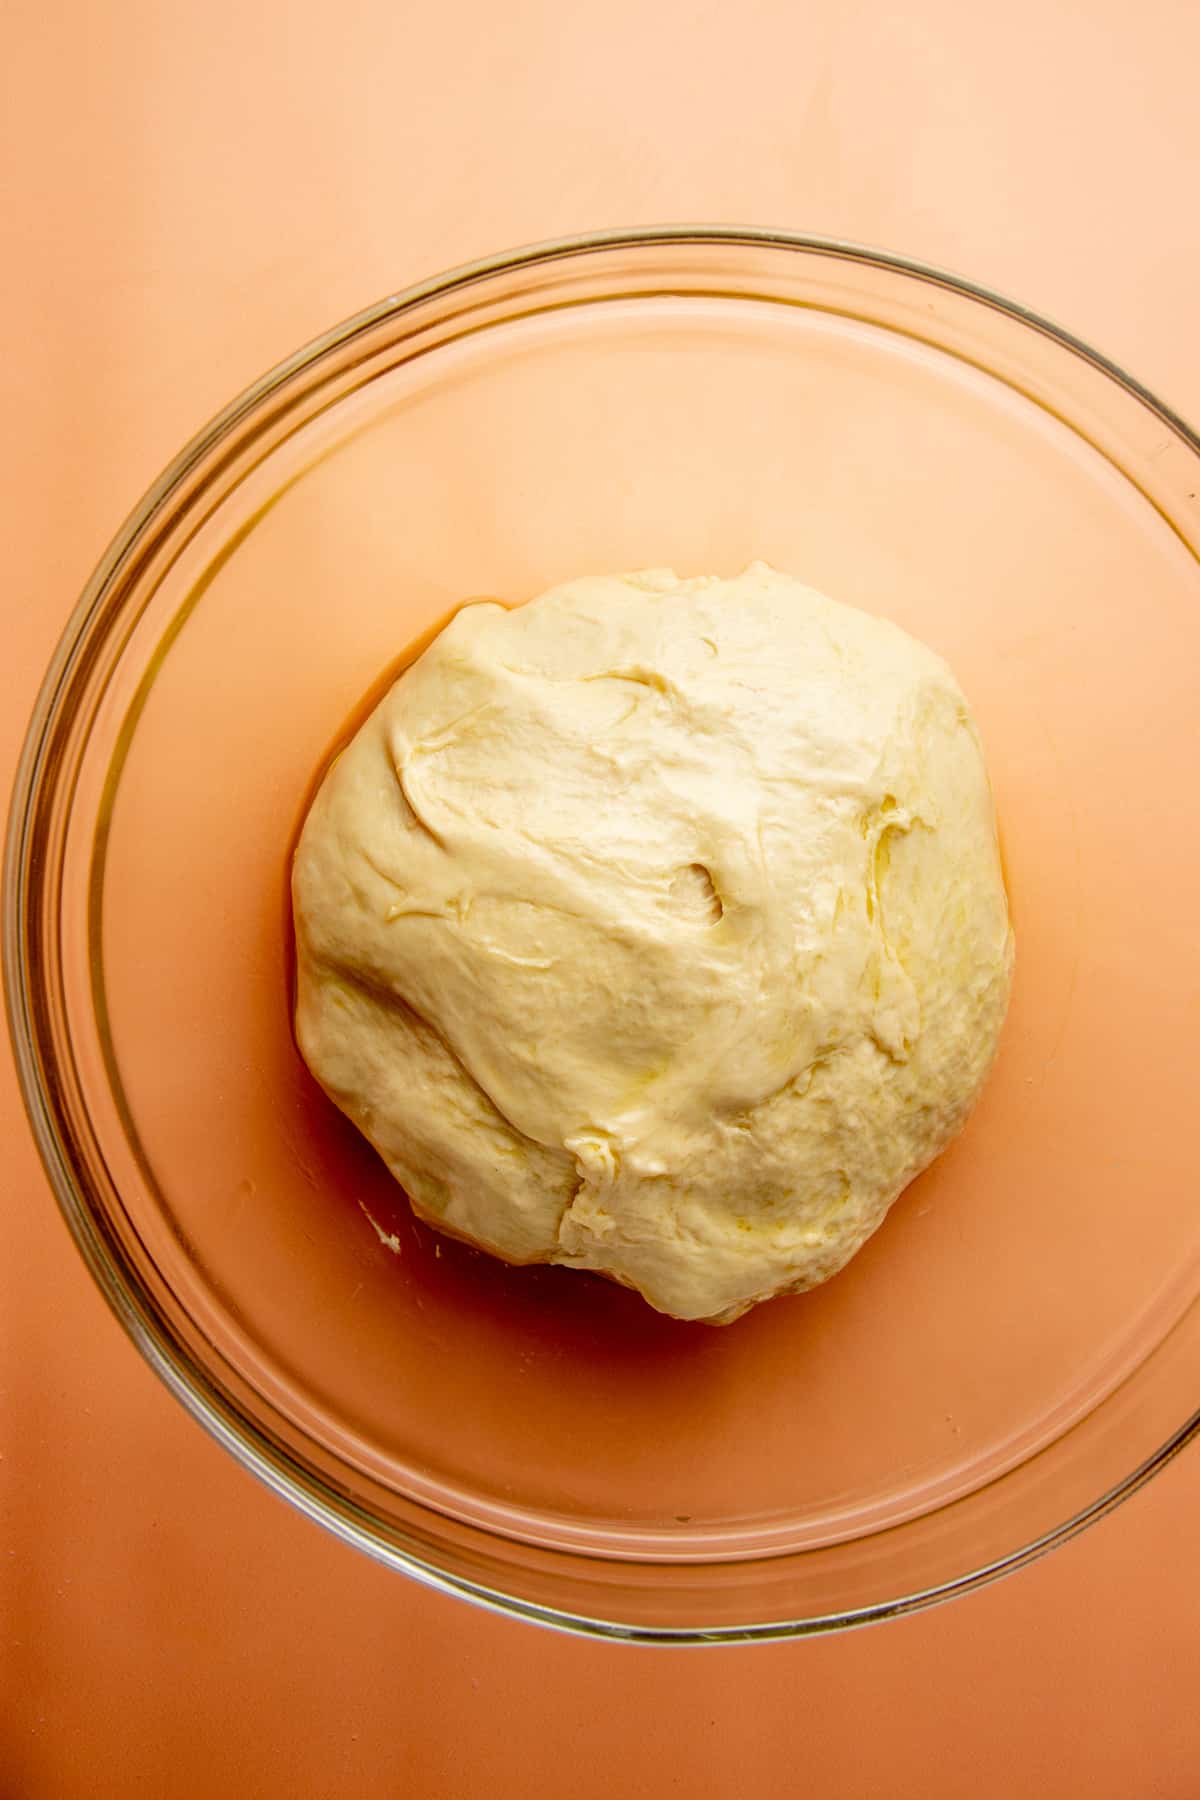 Unrisen dough sits in a glass bowl.